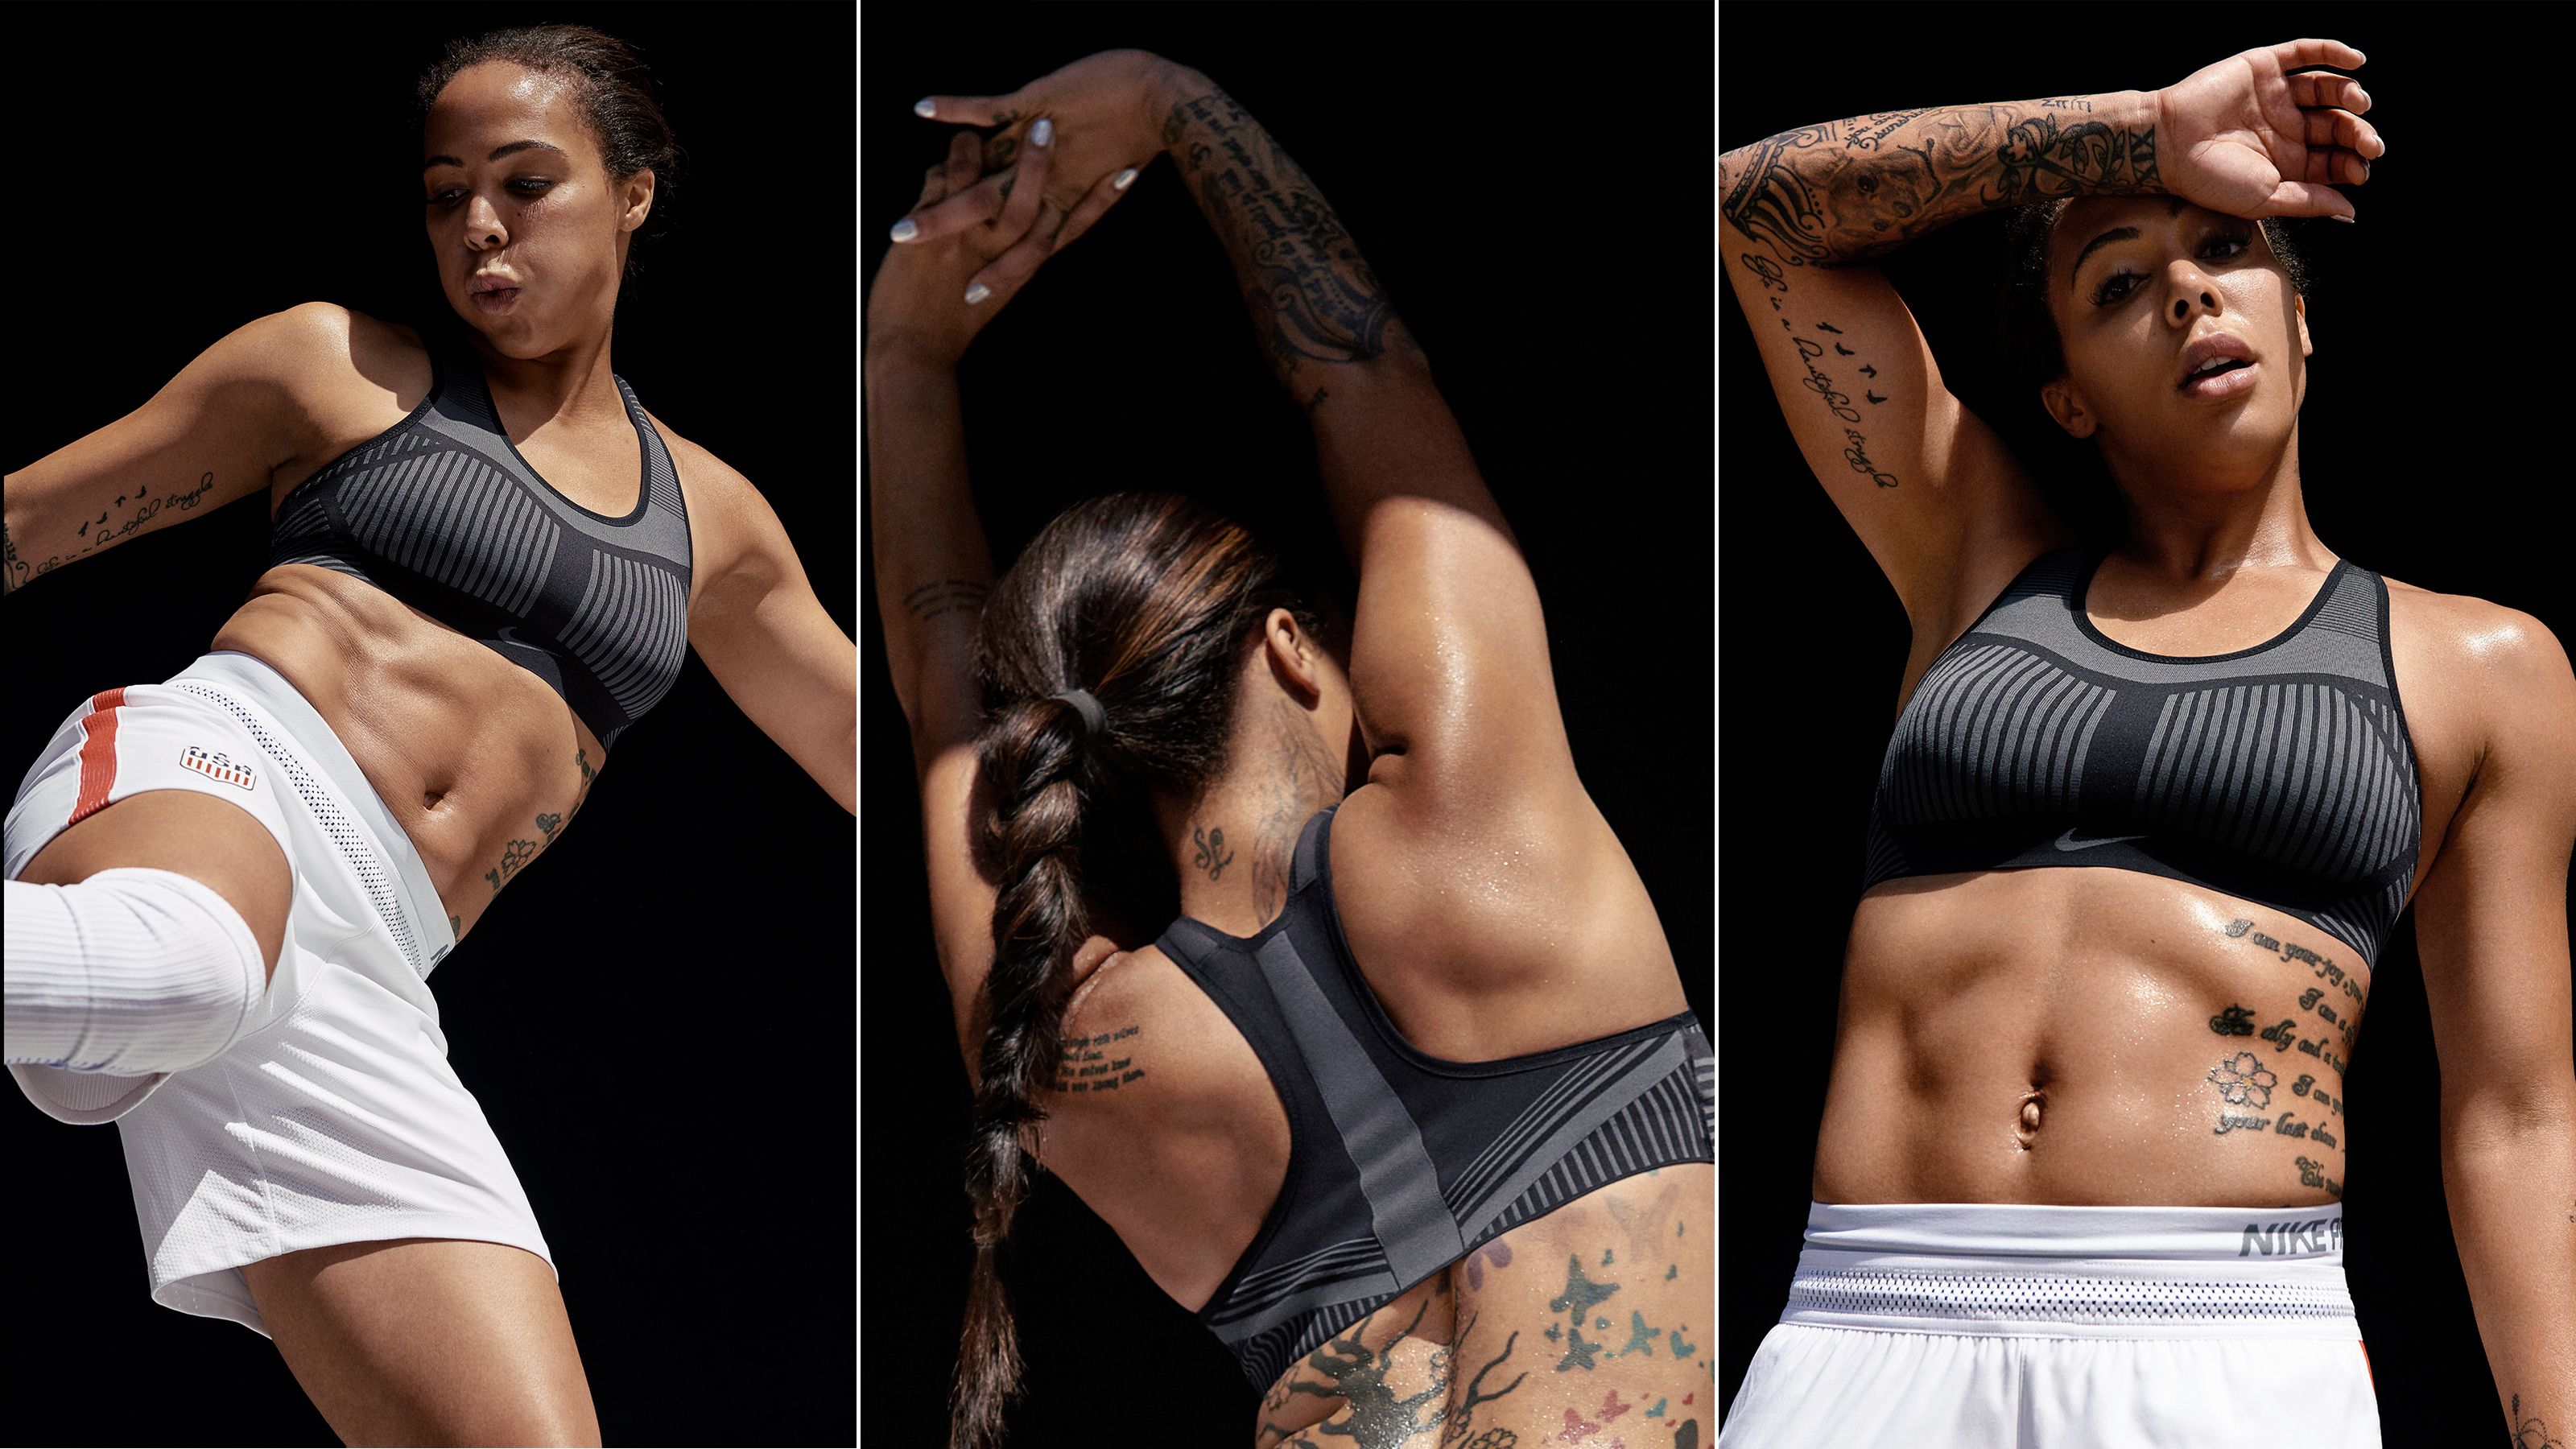 Nike's recent sports bra ad on Instagram receives 'body positive